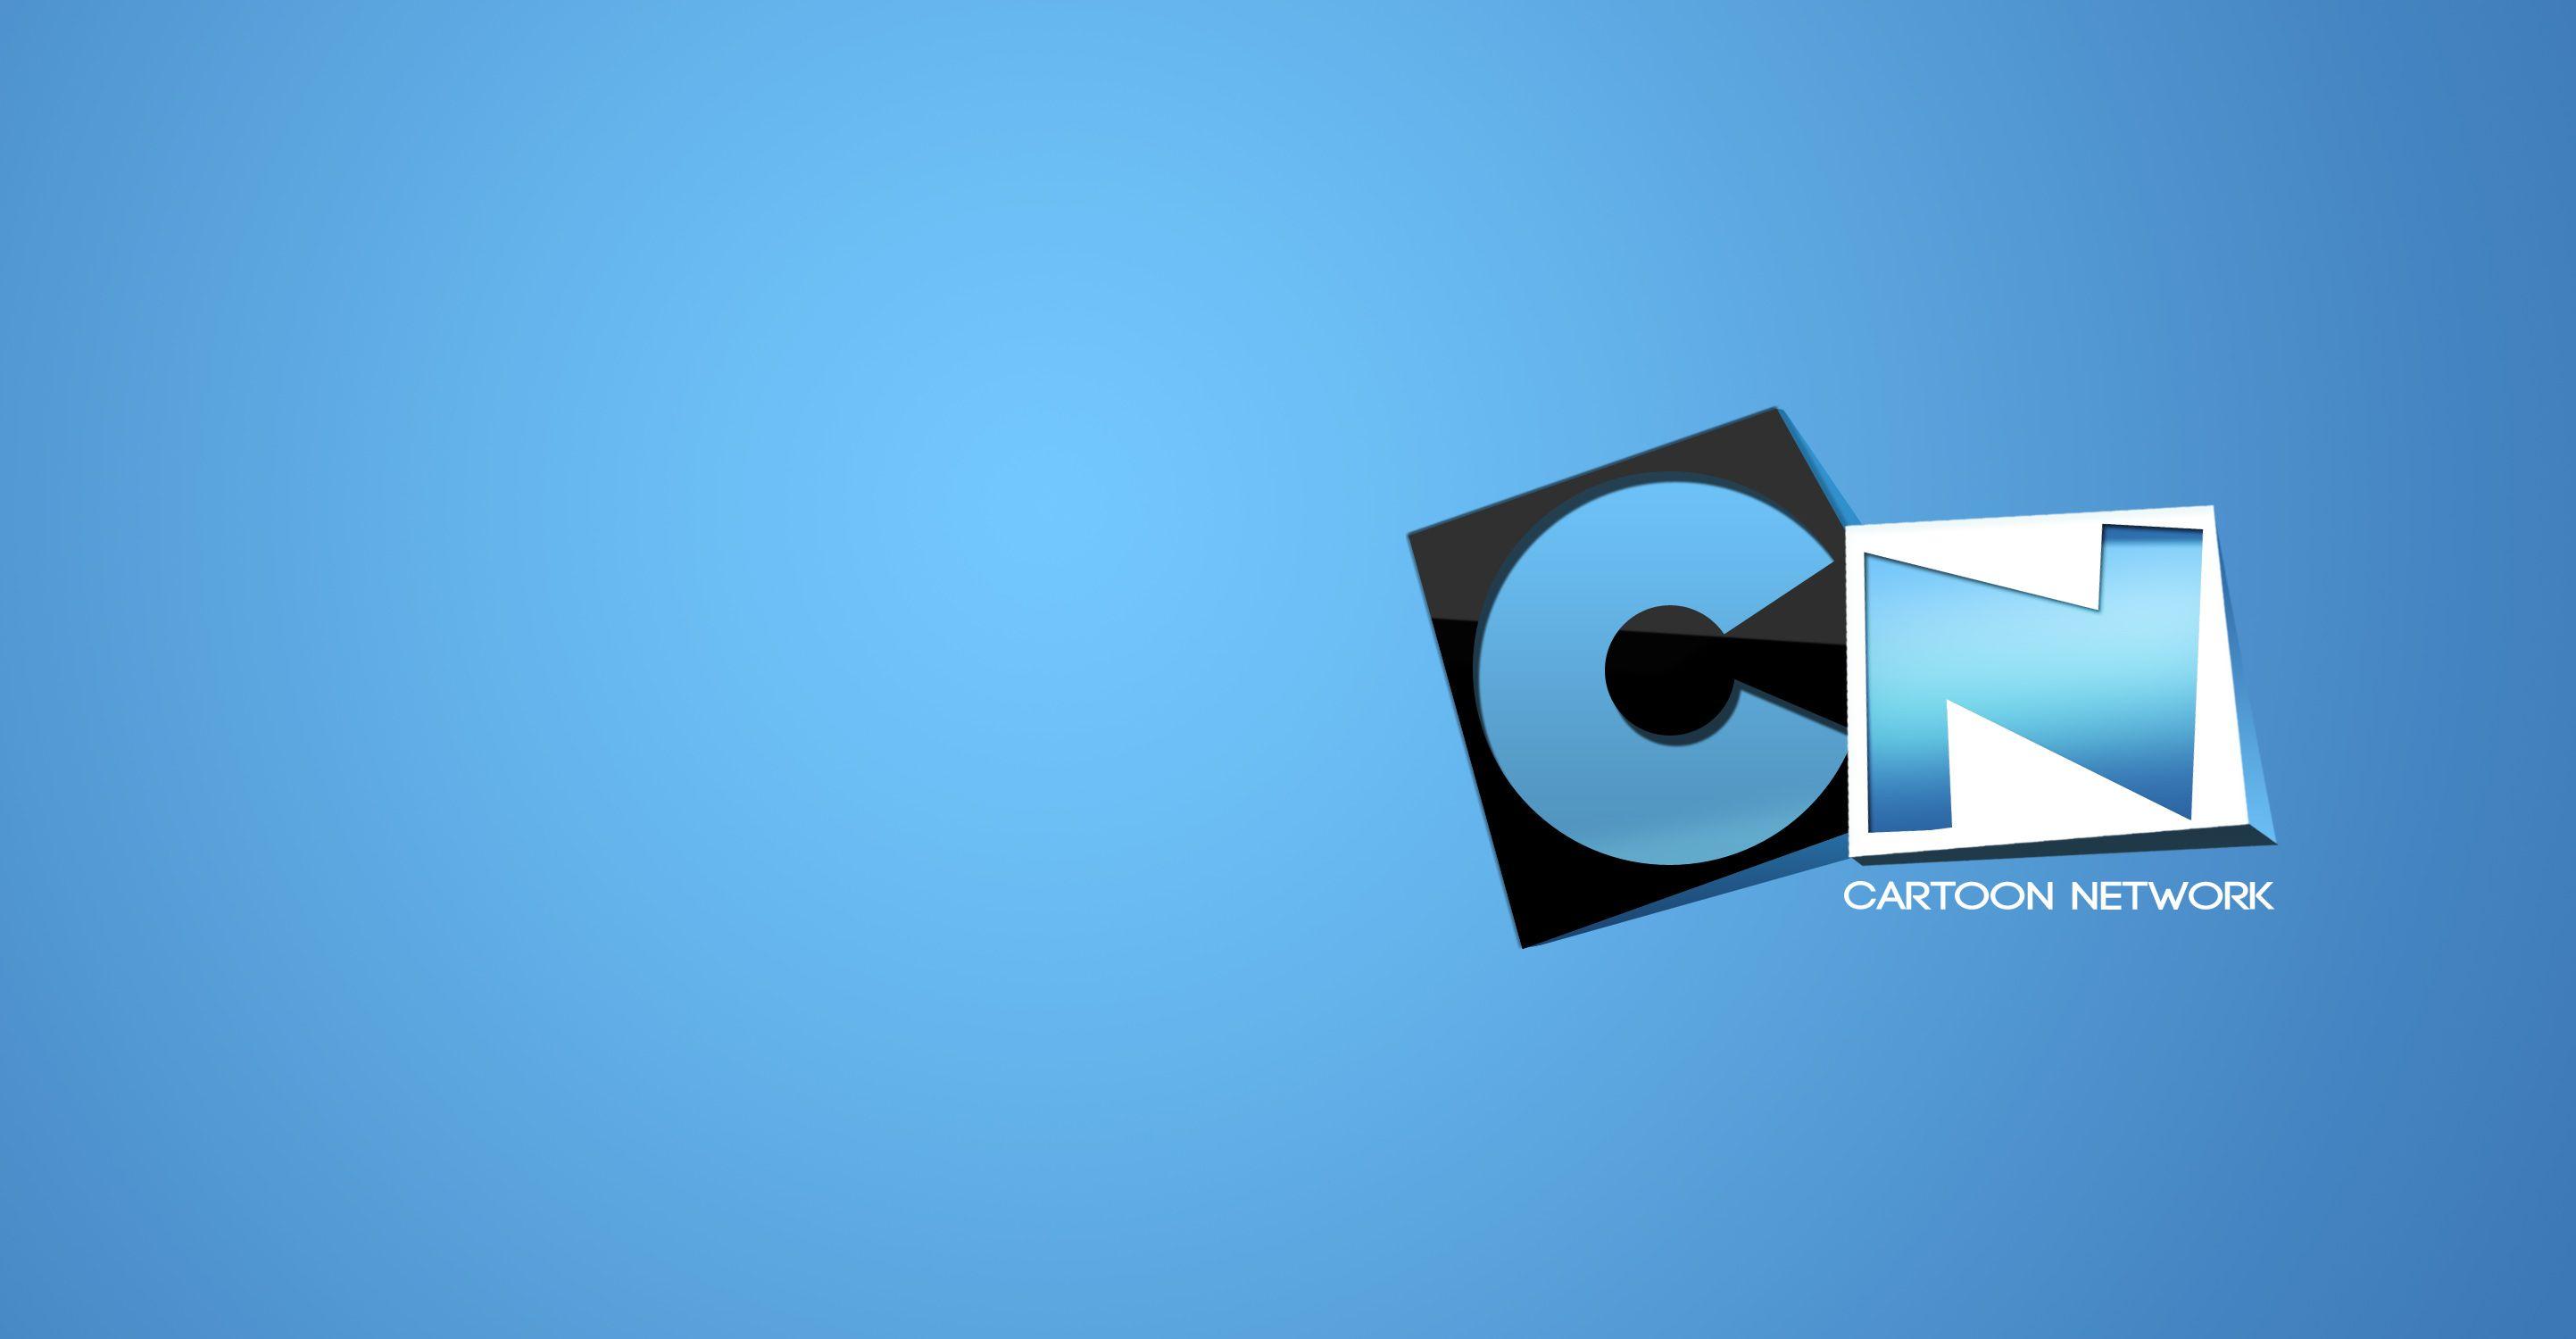 Cartoon Network Logo Wallpapers - Wallpaper Cave